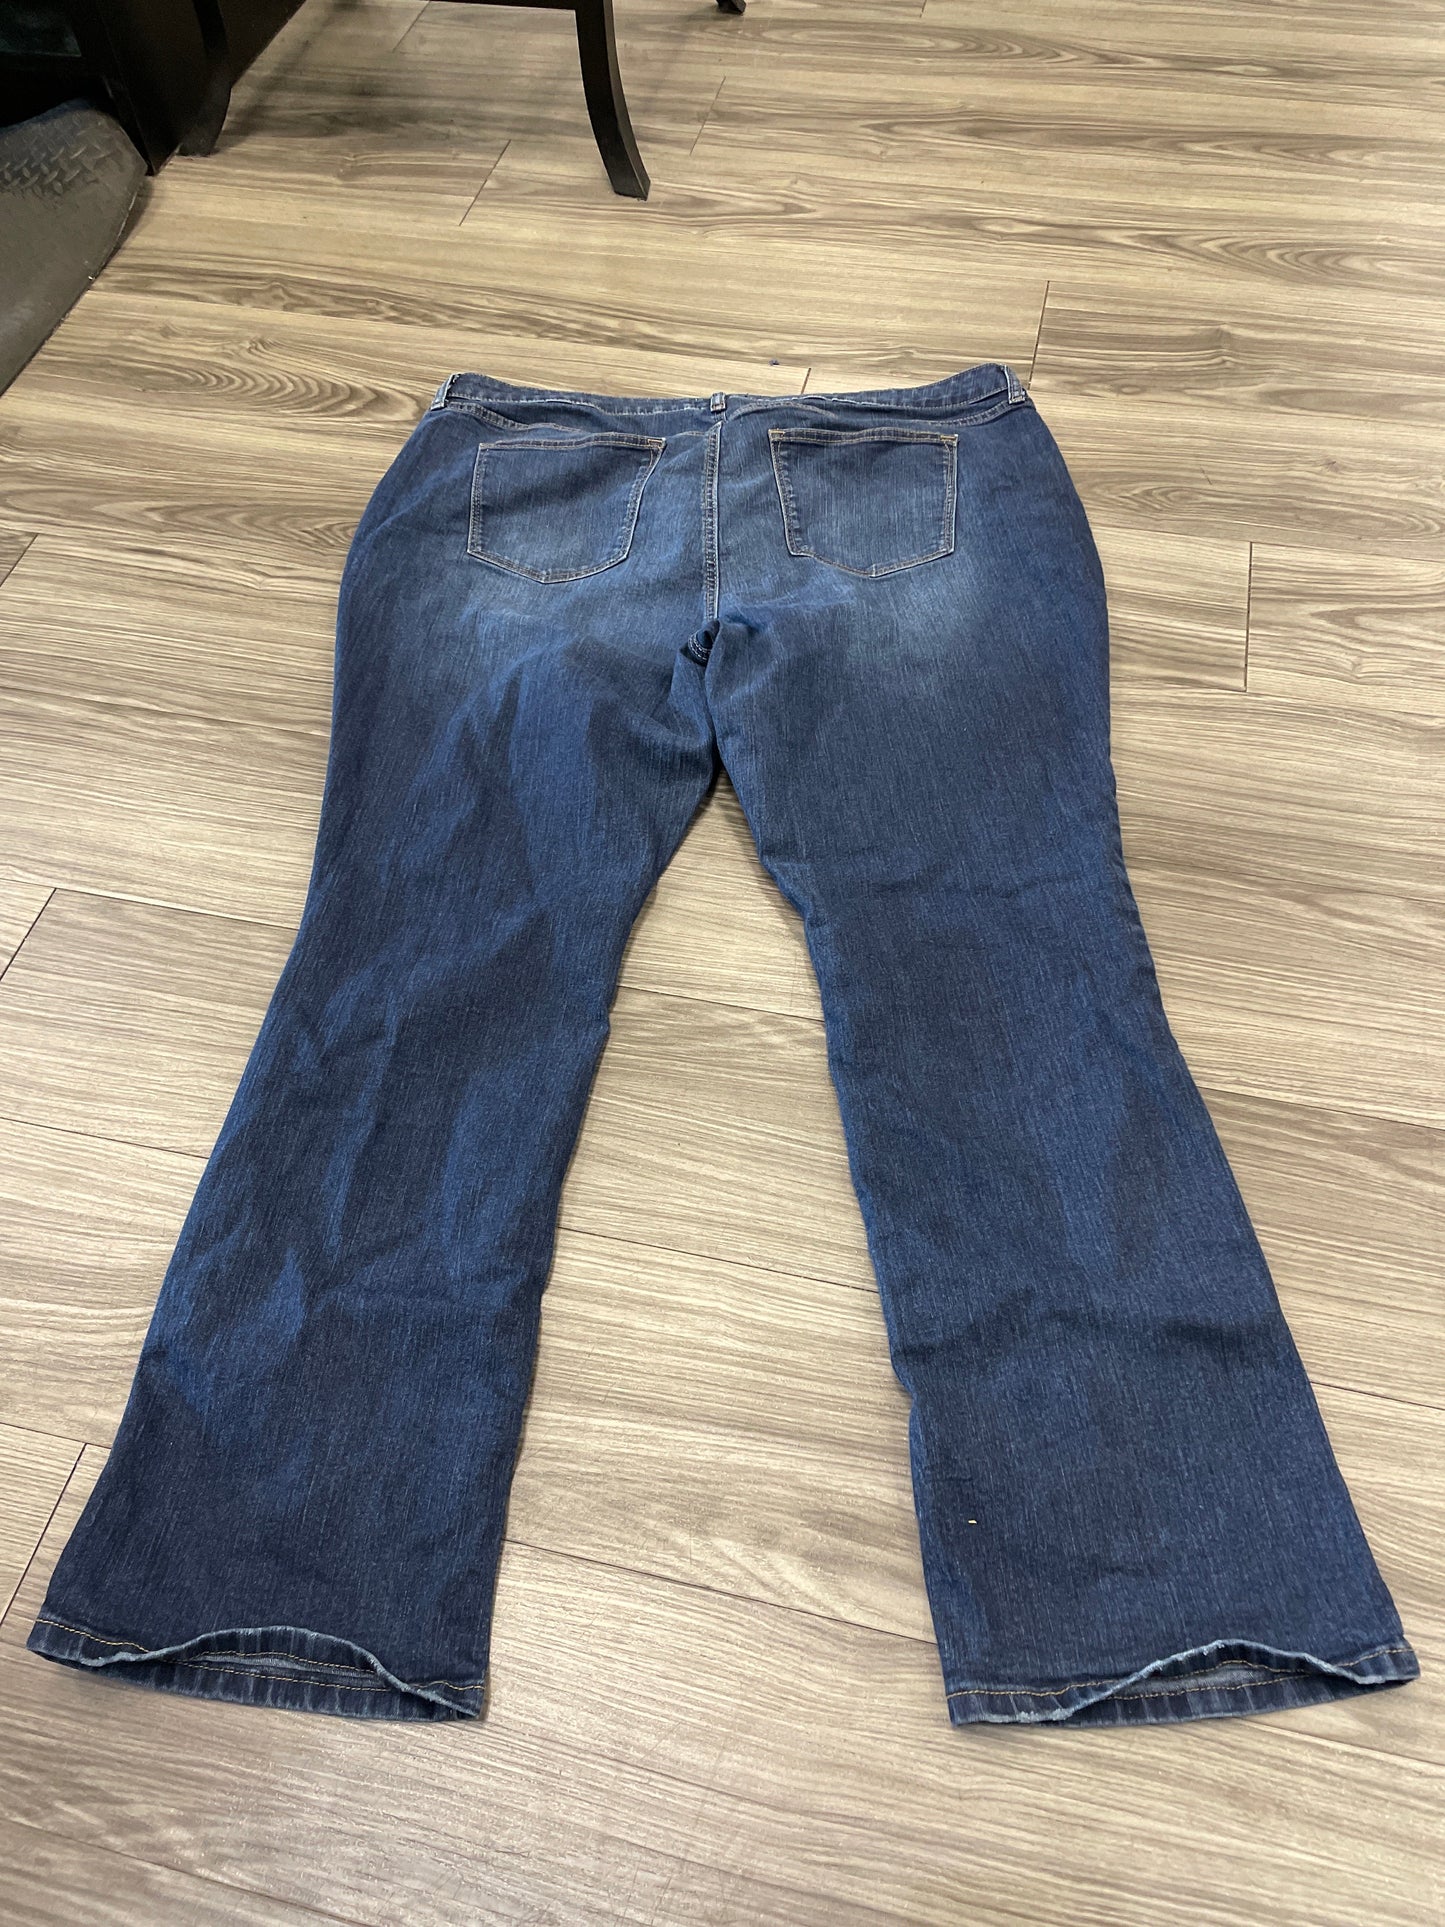 Jeans Boyfriend By Sonoma  Size: 20